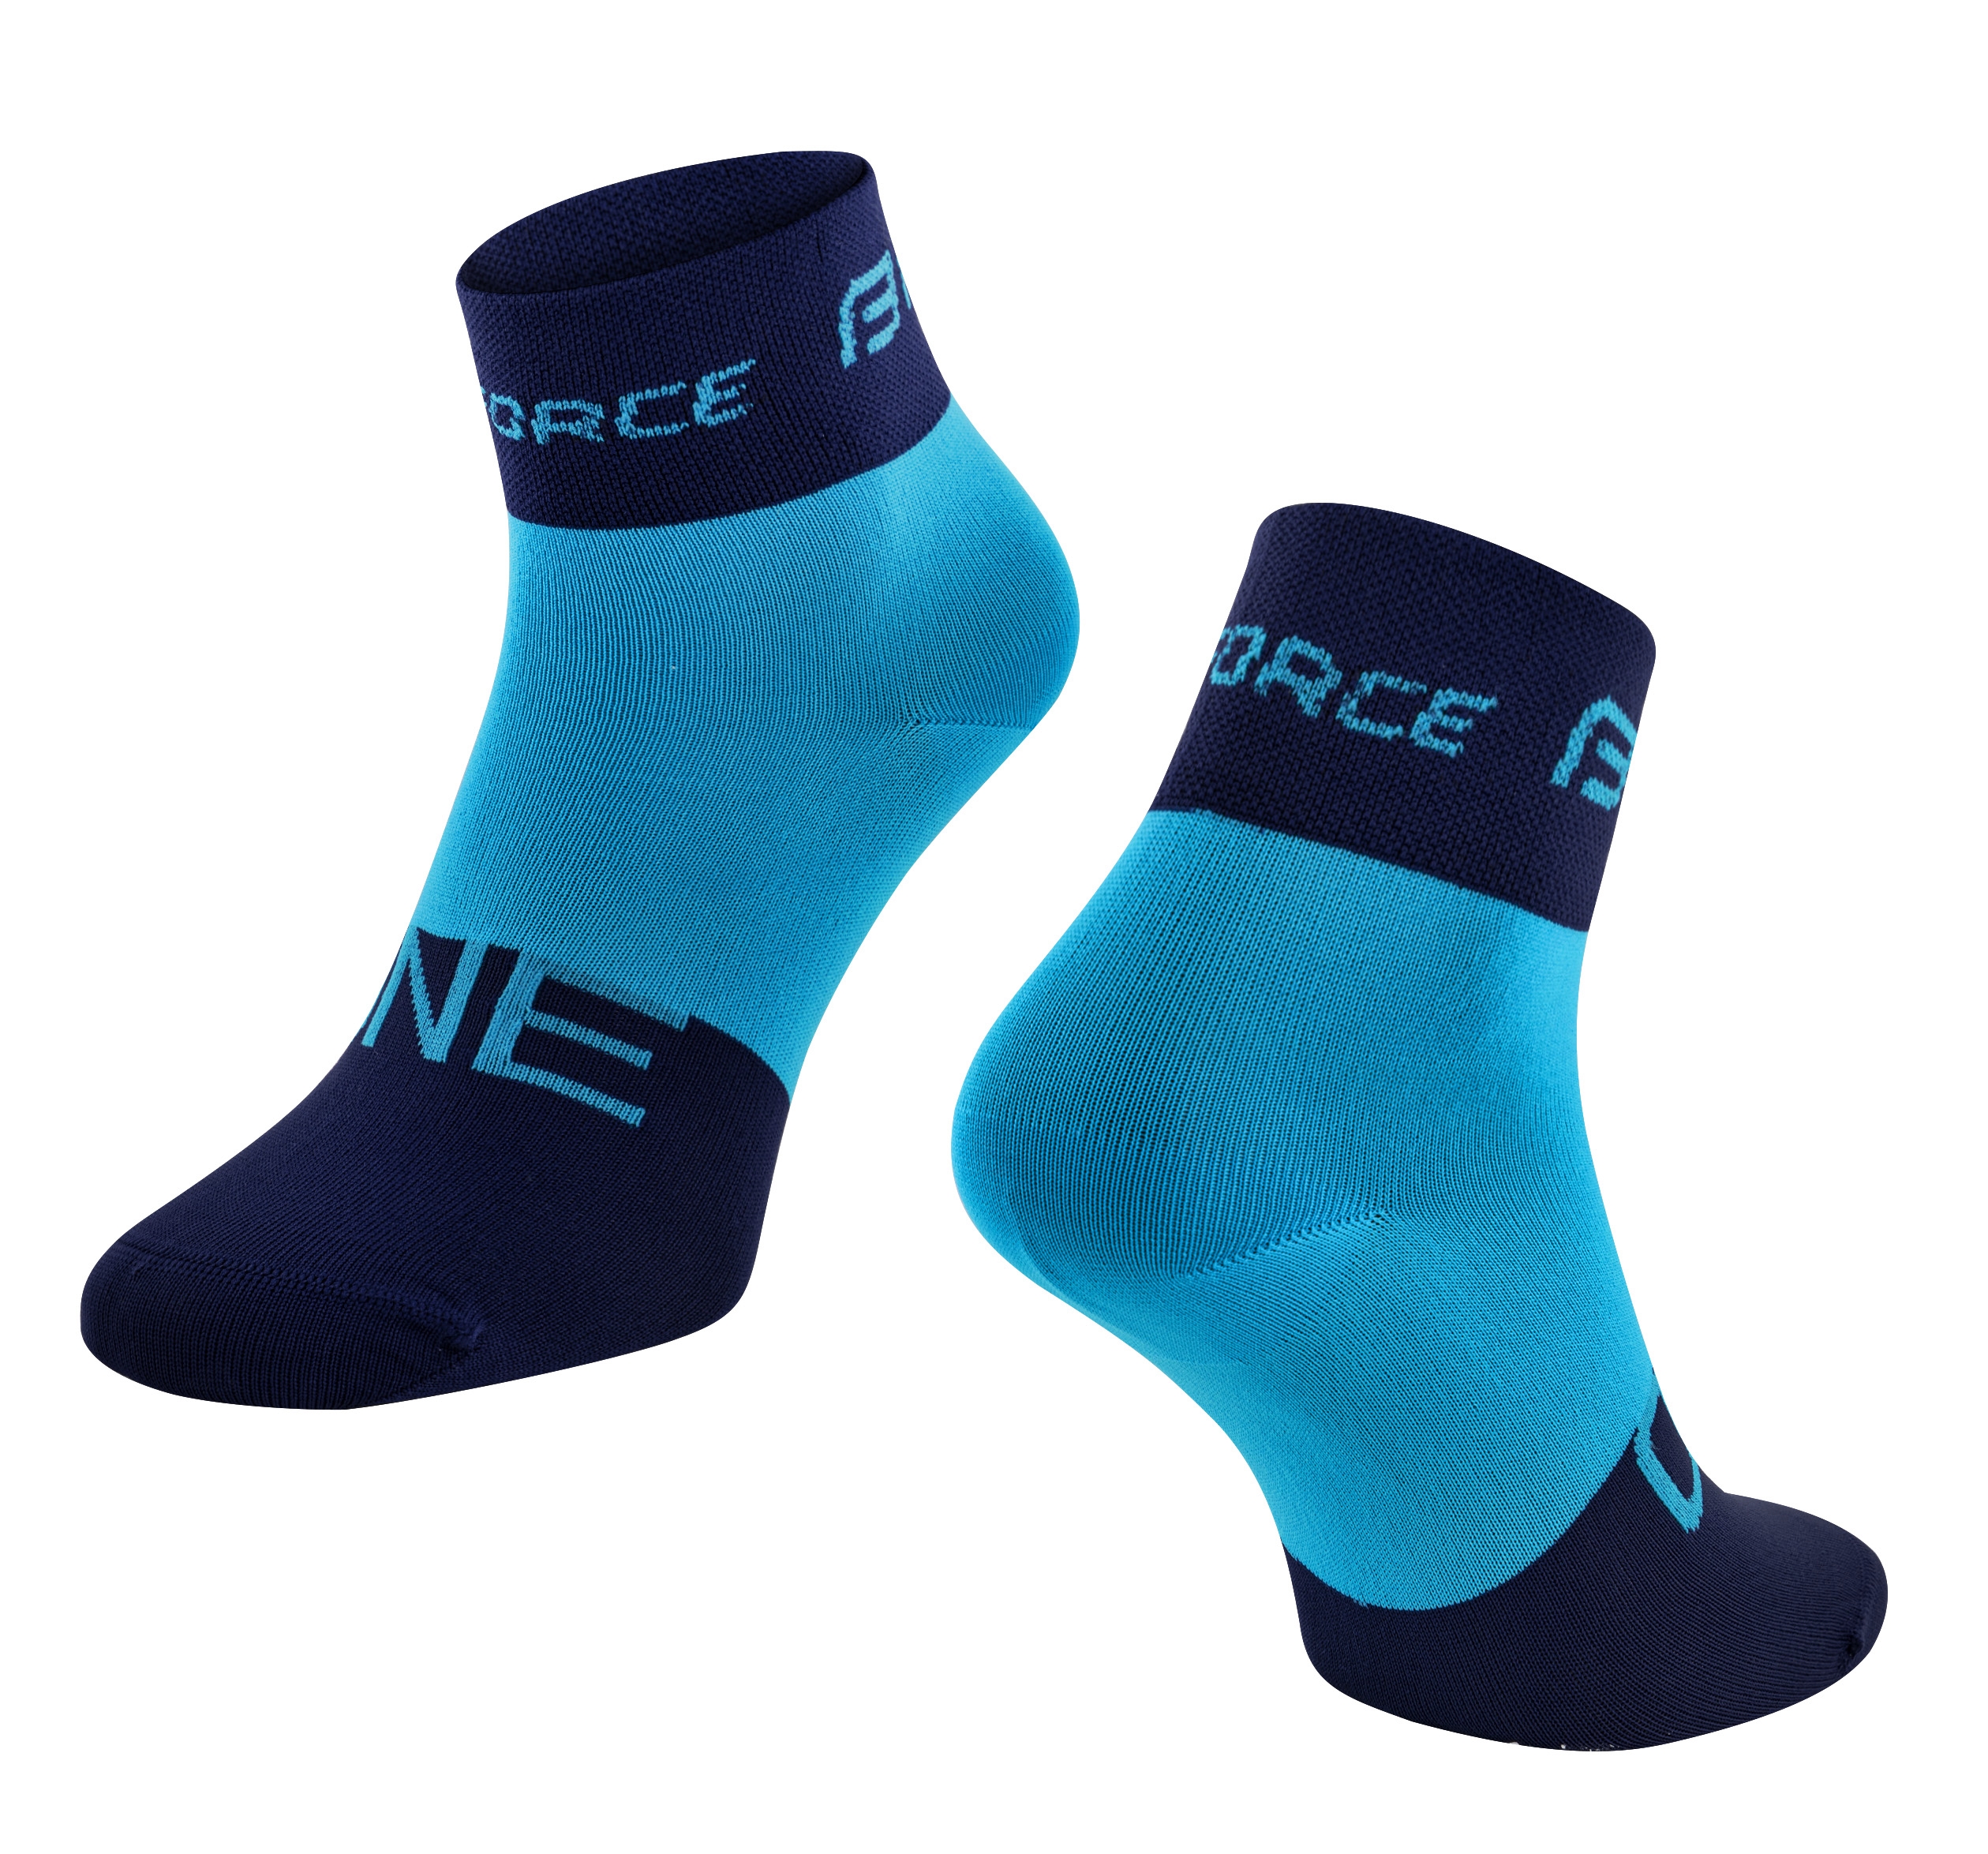 ponožky FORCE ONE, modré S-M/36-41